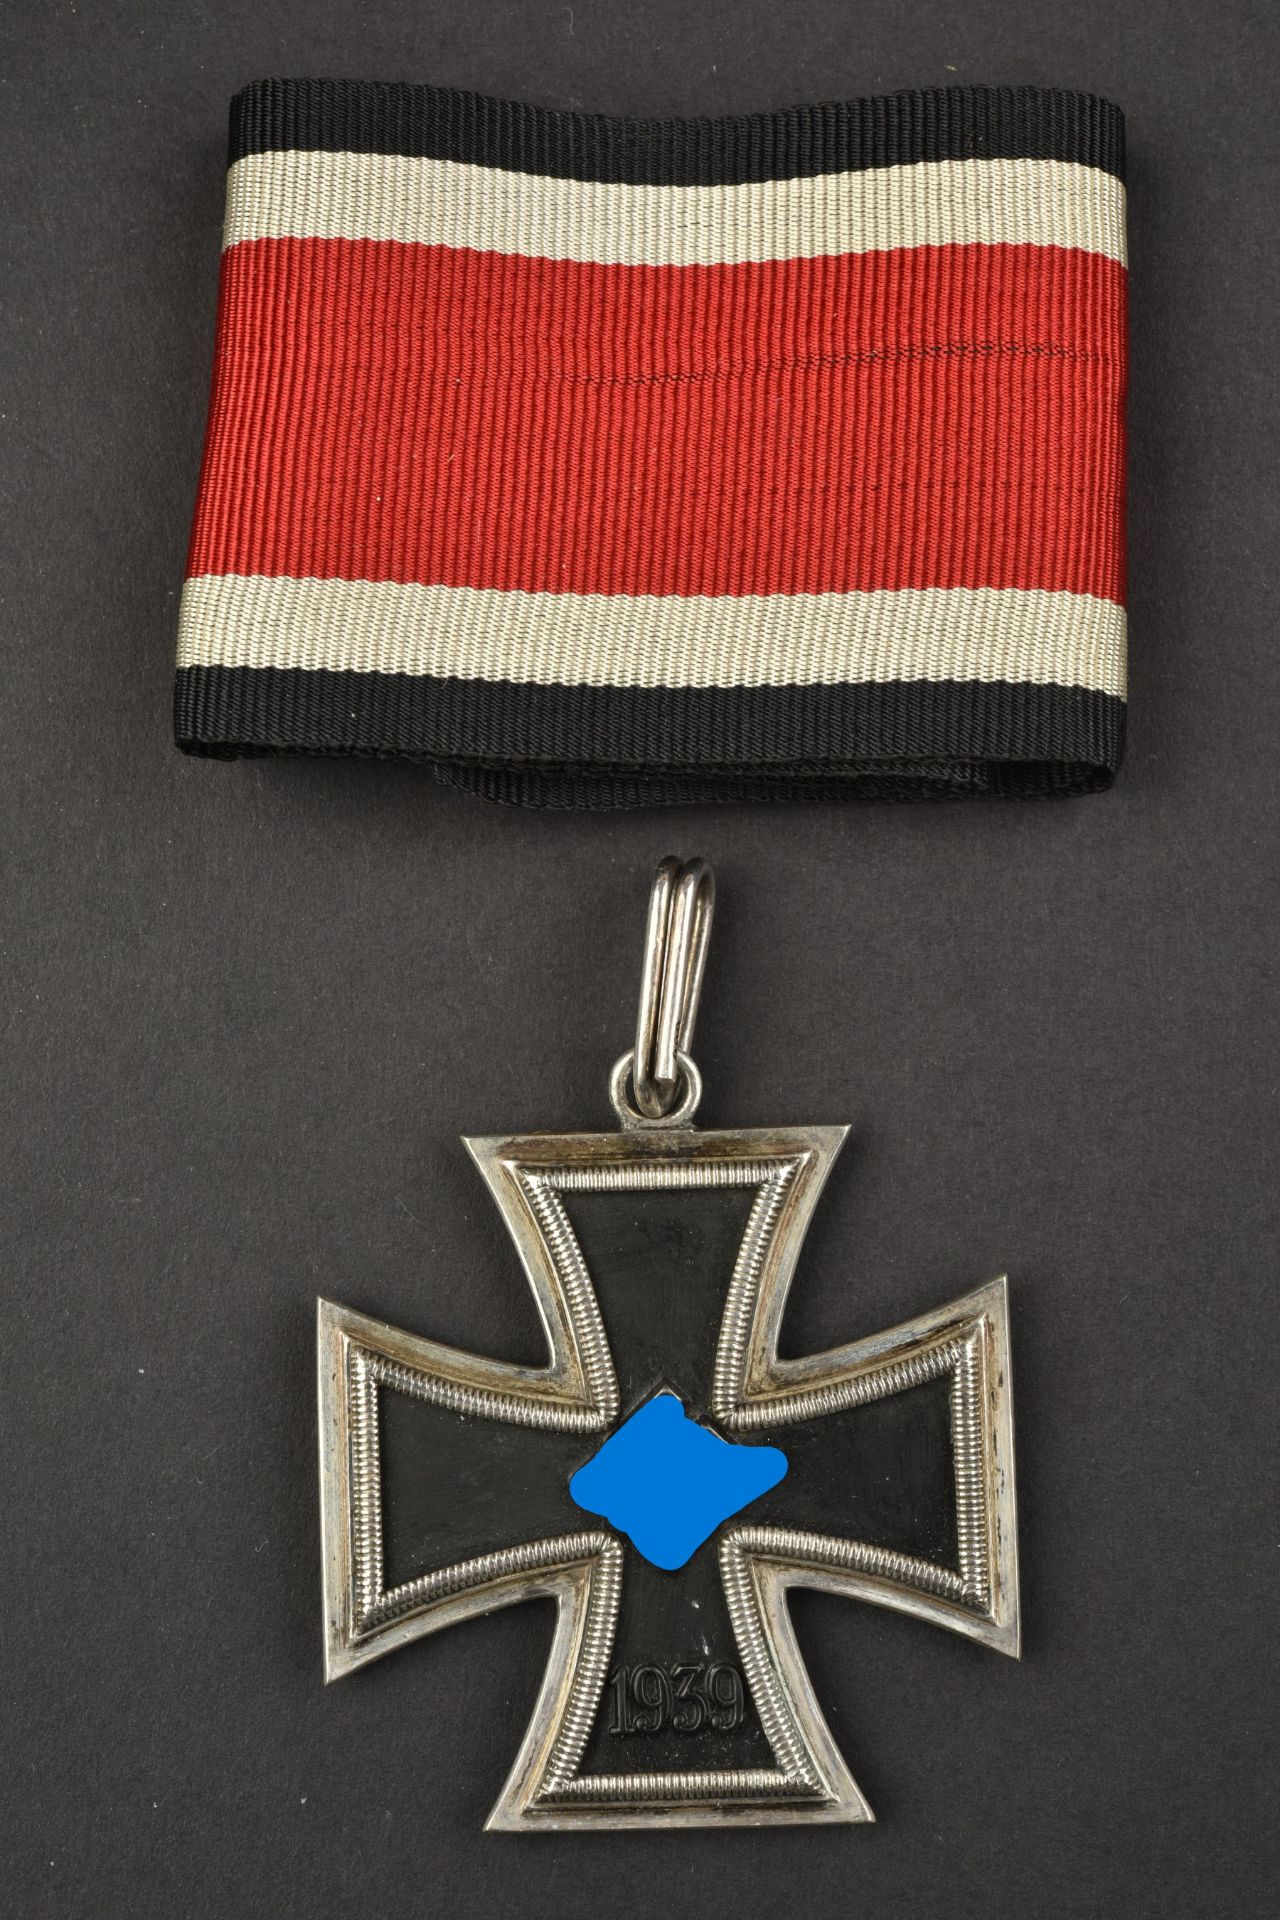 Reproduction de Croix de Chevalier. Reproduction of a Knight s Cross. - Image 8 of 15